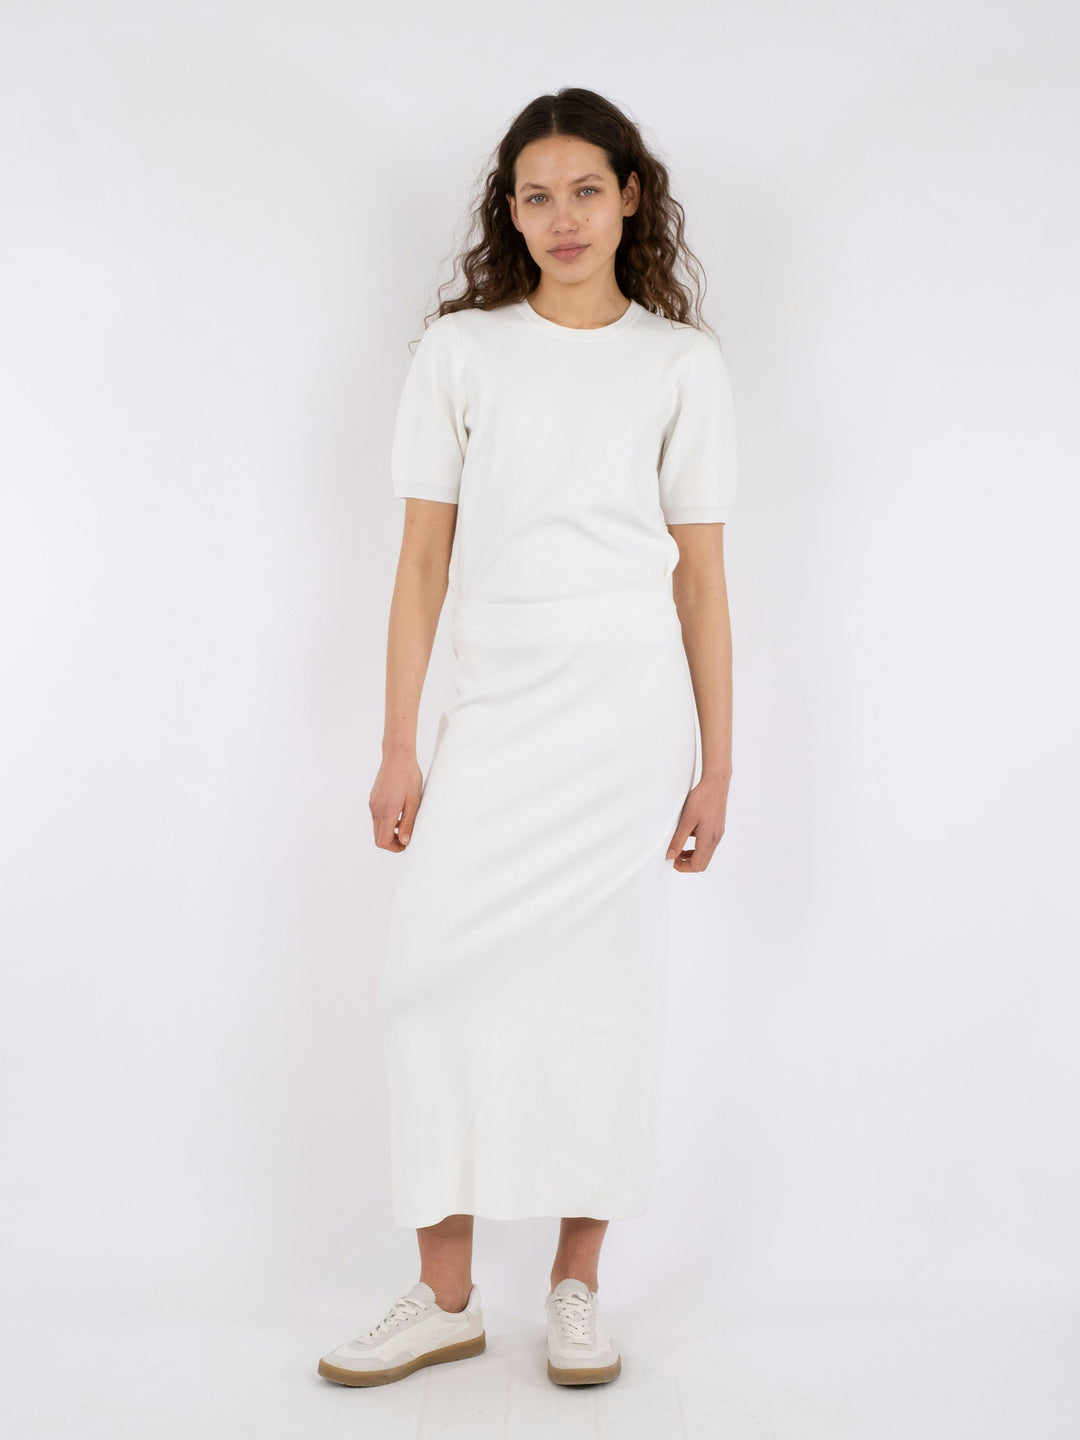 Neo Noir - Aston Knit Skirt - Off White